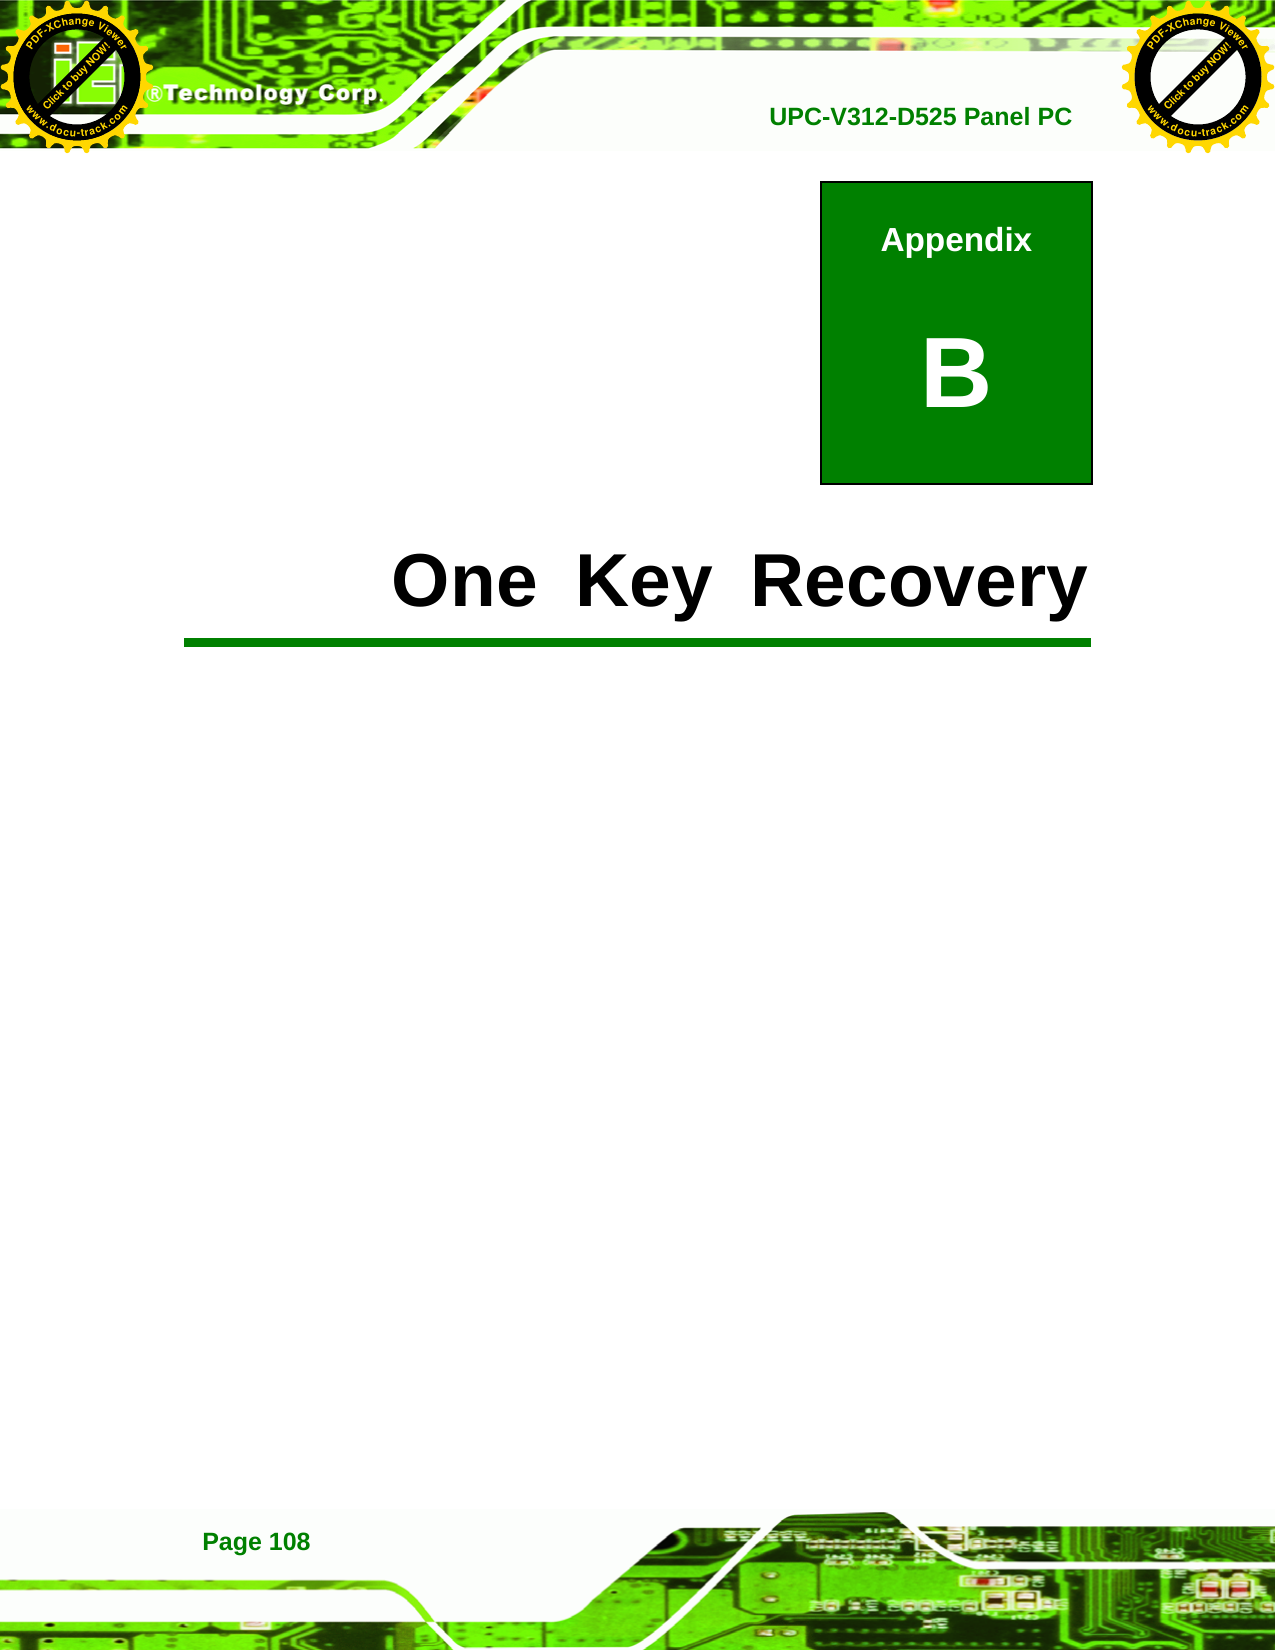   UPC-V312-D525 Panel PCPage 108 Appendix B B One Key Recovery Click to buy NOW!PDF-XChange Viewerwww.docu-track.comClick to buy NOW!PDF-XChange Viewerwww.docu-track.com